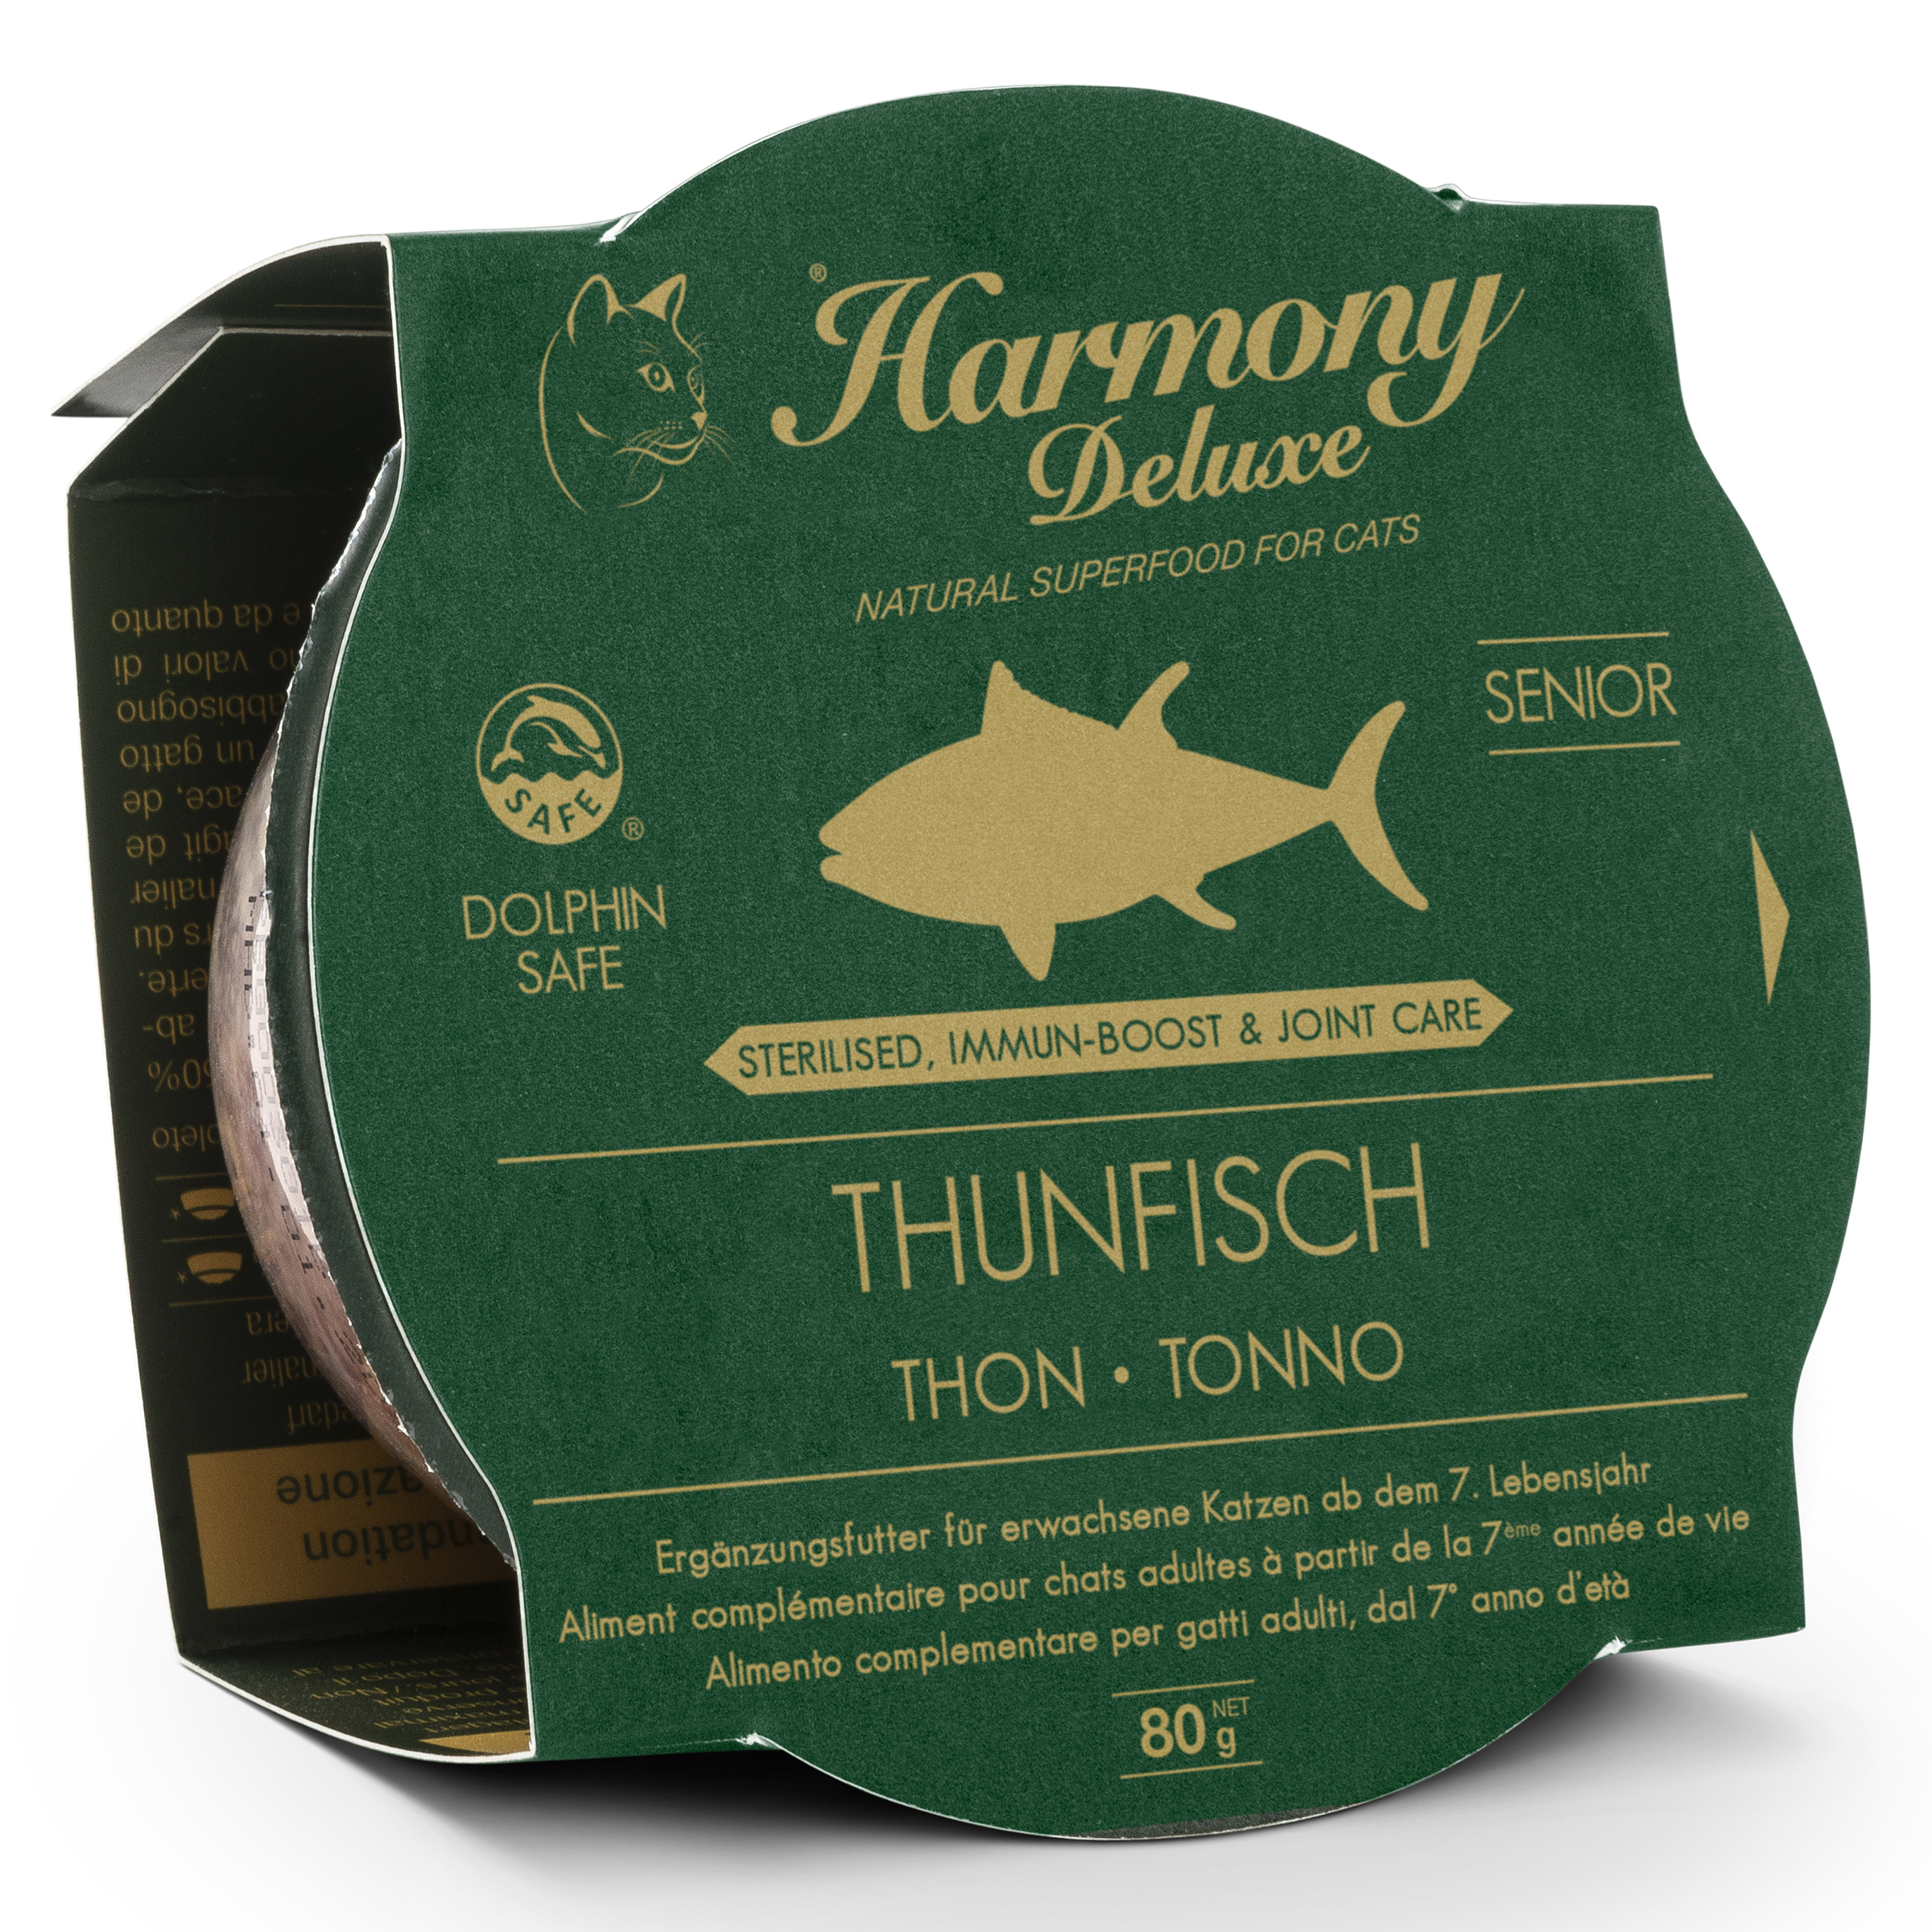 Harmony Cat Deluxe Cup Senior Thunfisch Sterilised Immun-Boost & Care